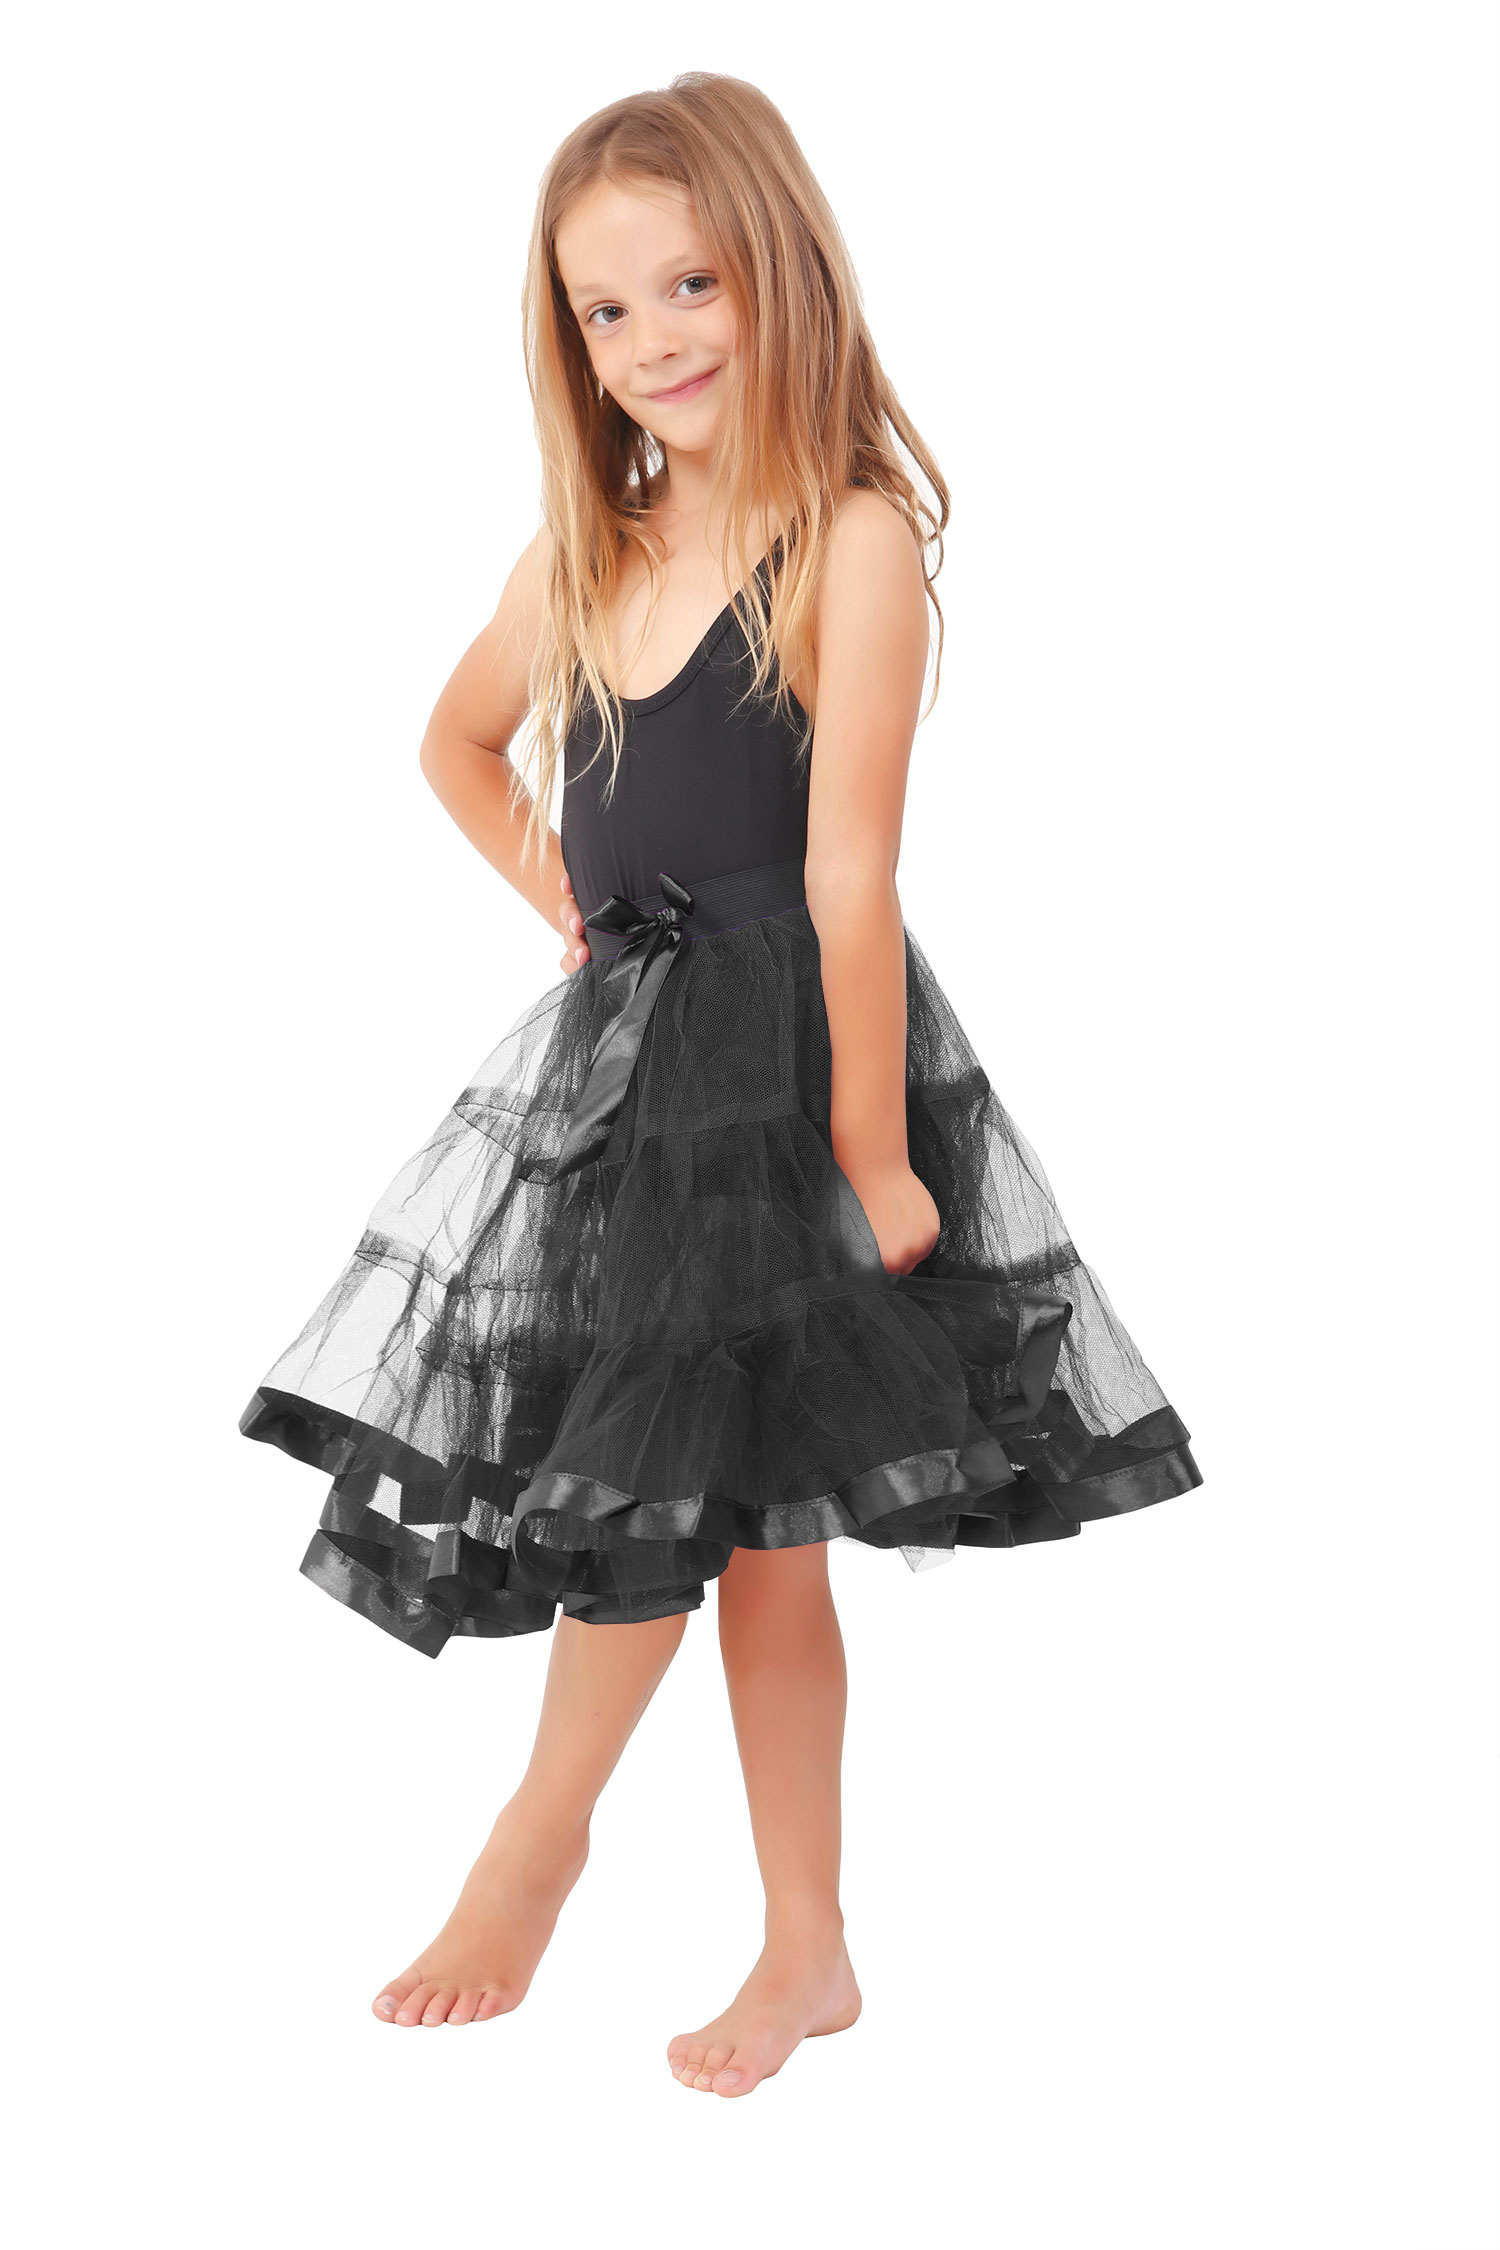 Crazy Chick Girls 2 Layers Black Petticoat Tutu Skirt (18 Inches Long)